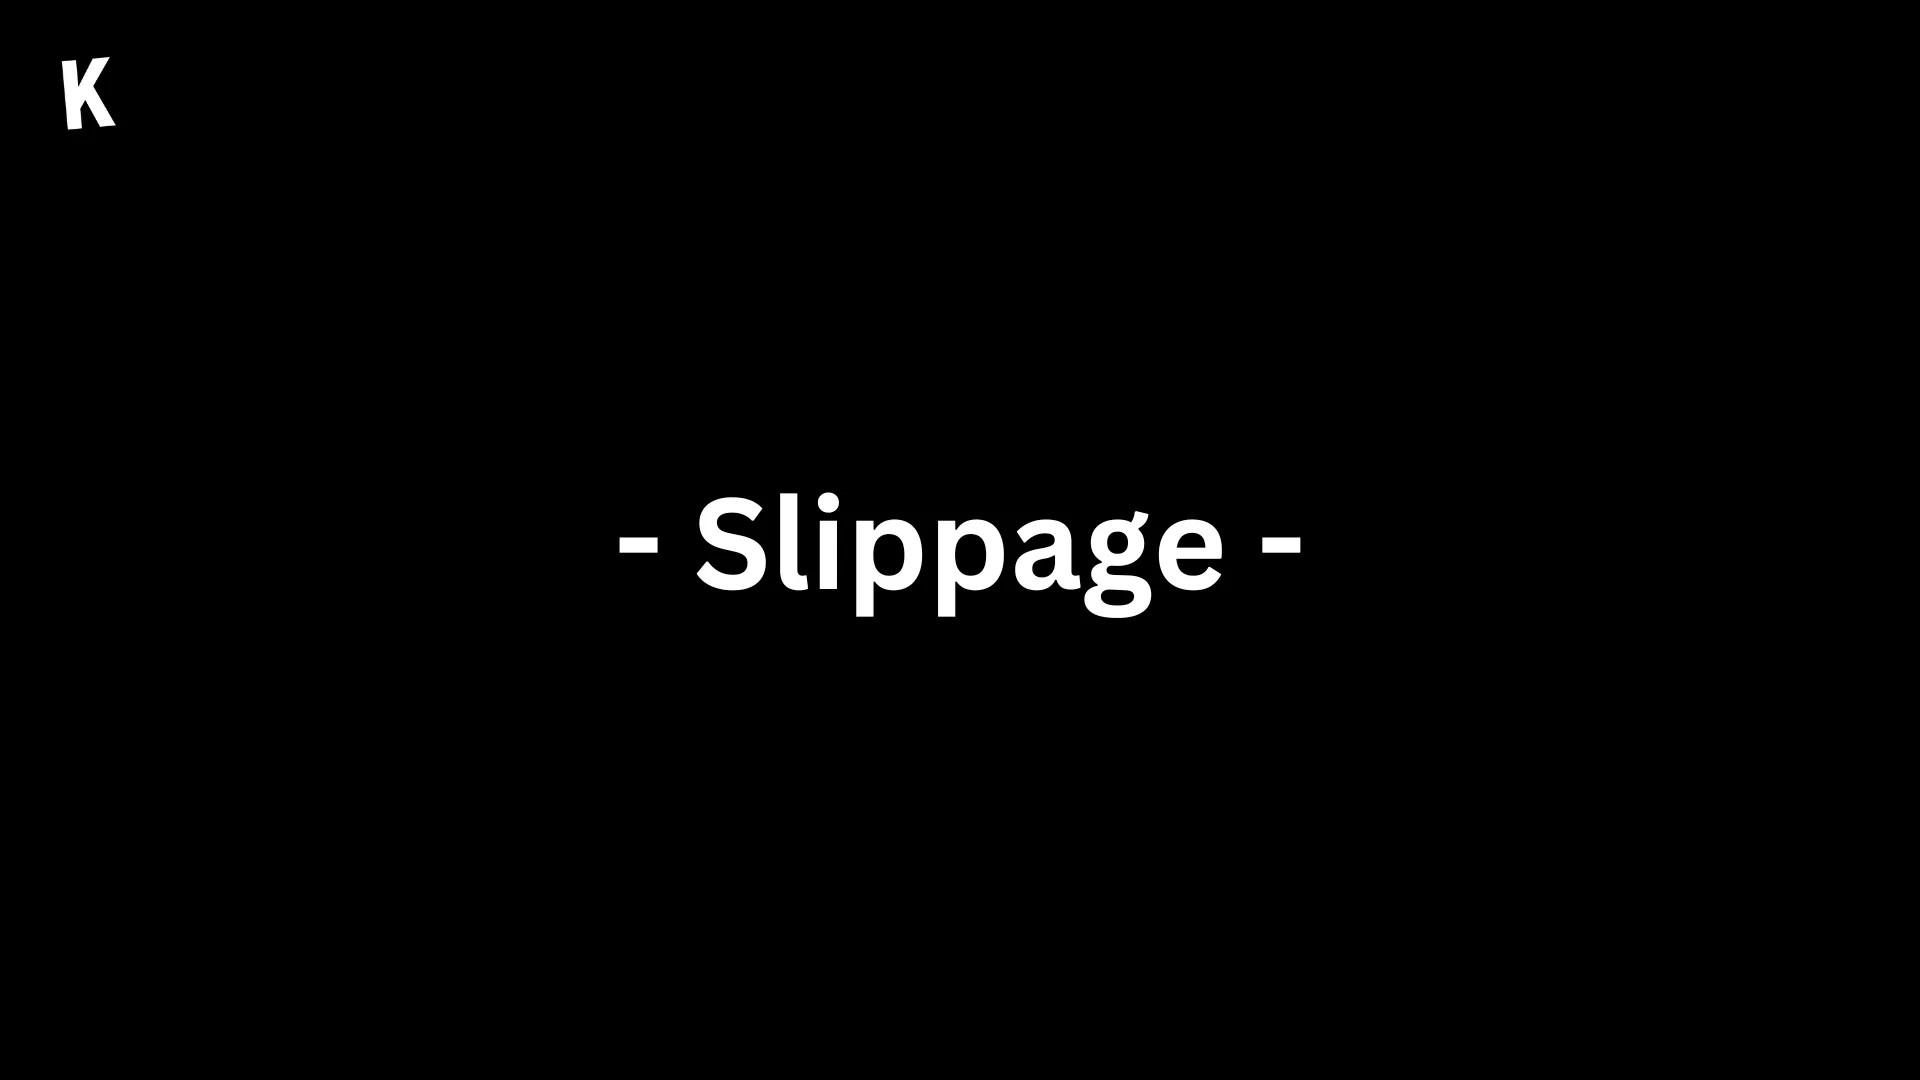 Slippage